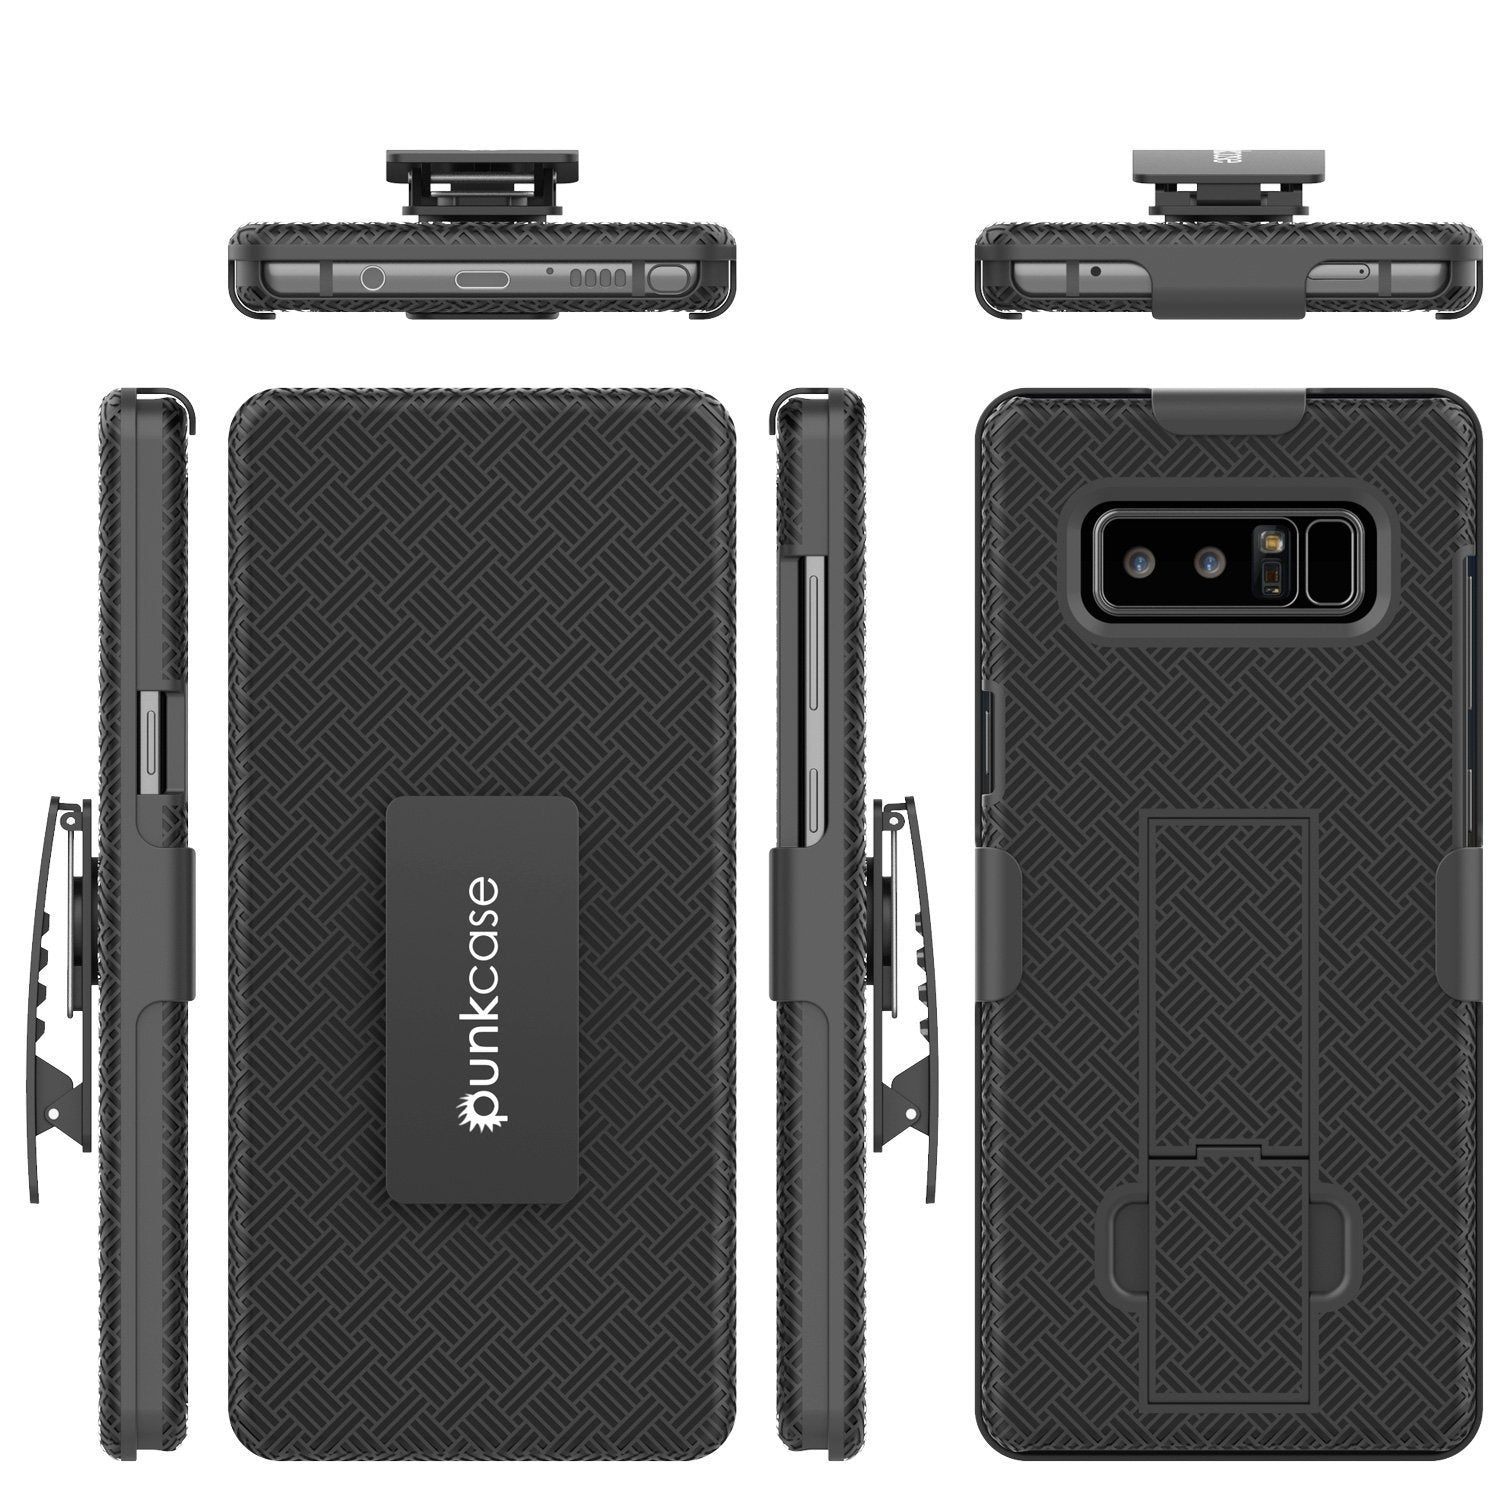 Galaxy Note 8 Case, Holster Belt Clip & Built-In Kickstand [Black]